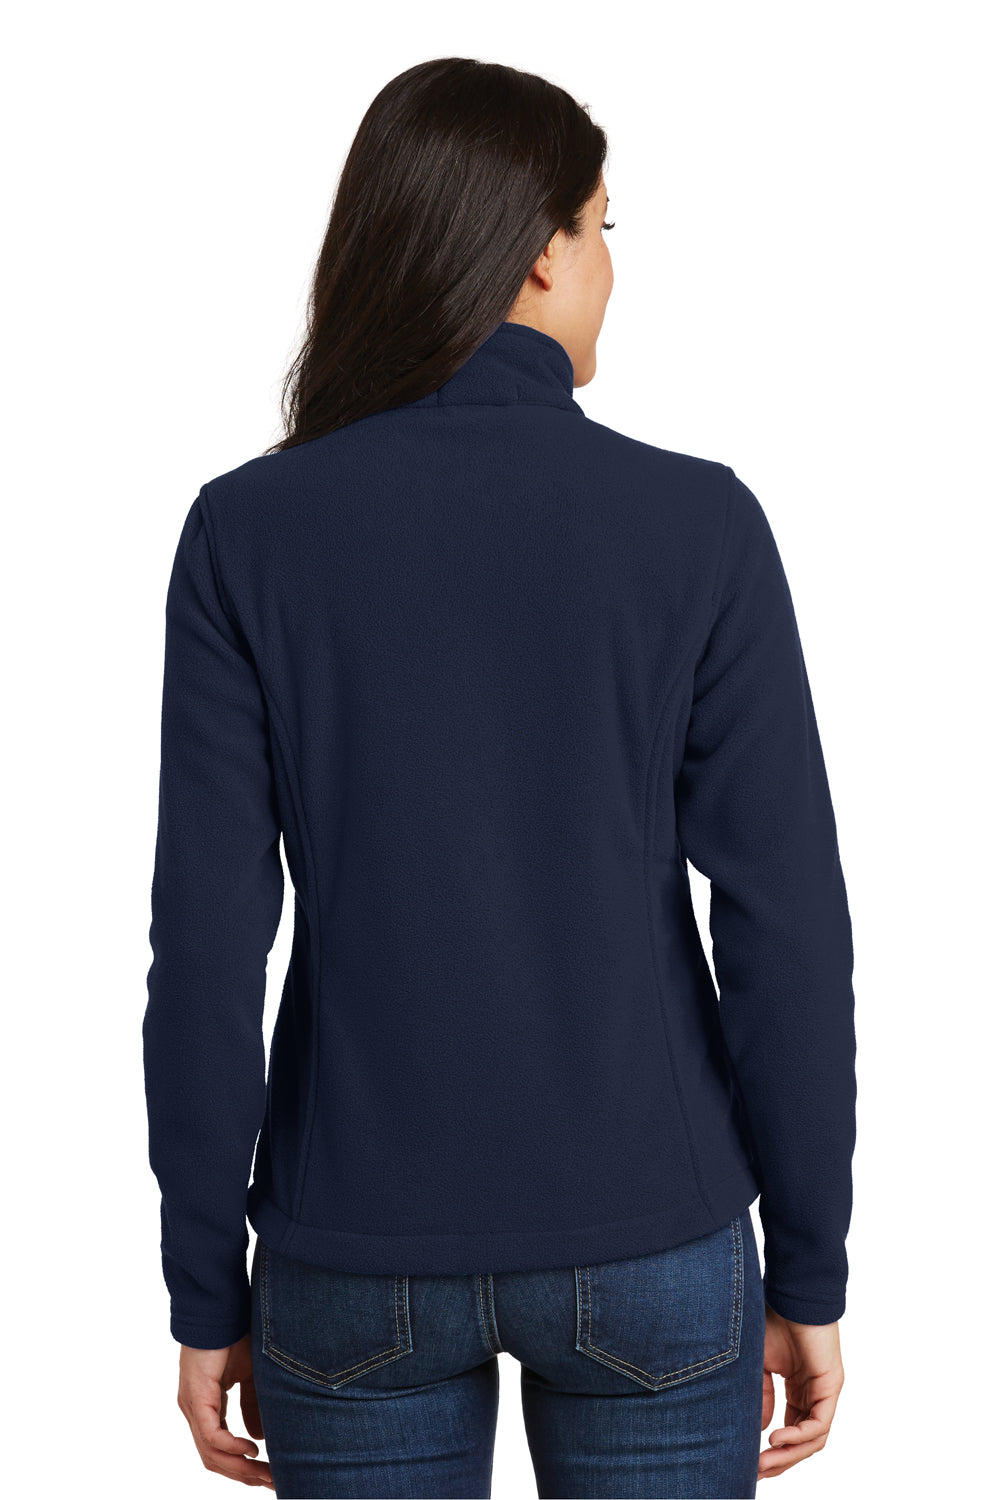 Port Authority L217 Womens Full Zip Fleece Jacket Navy Blue Back